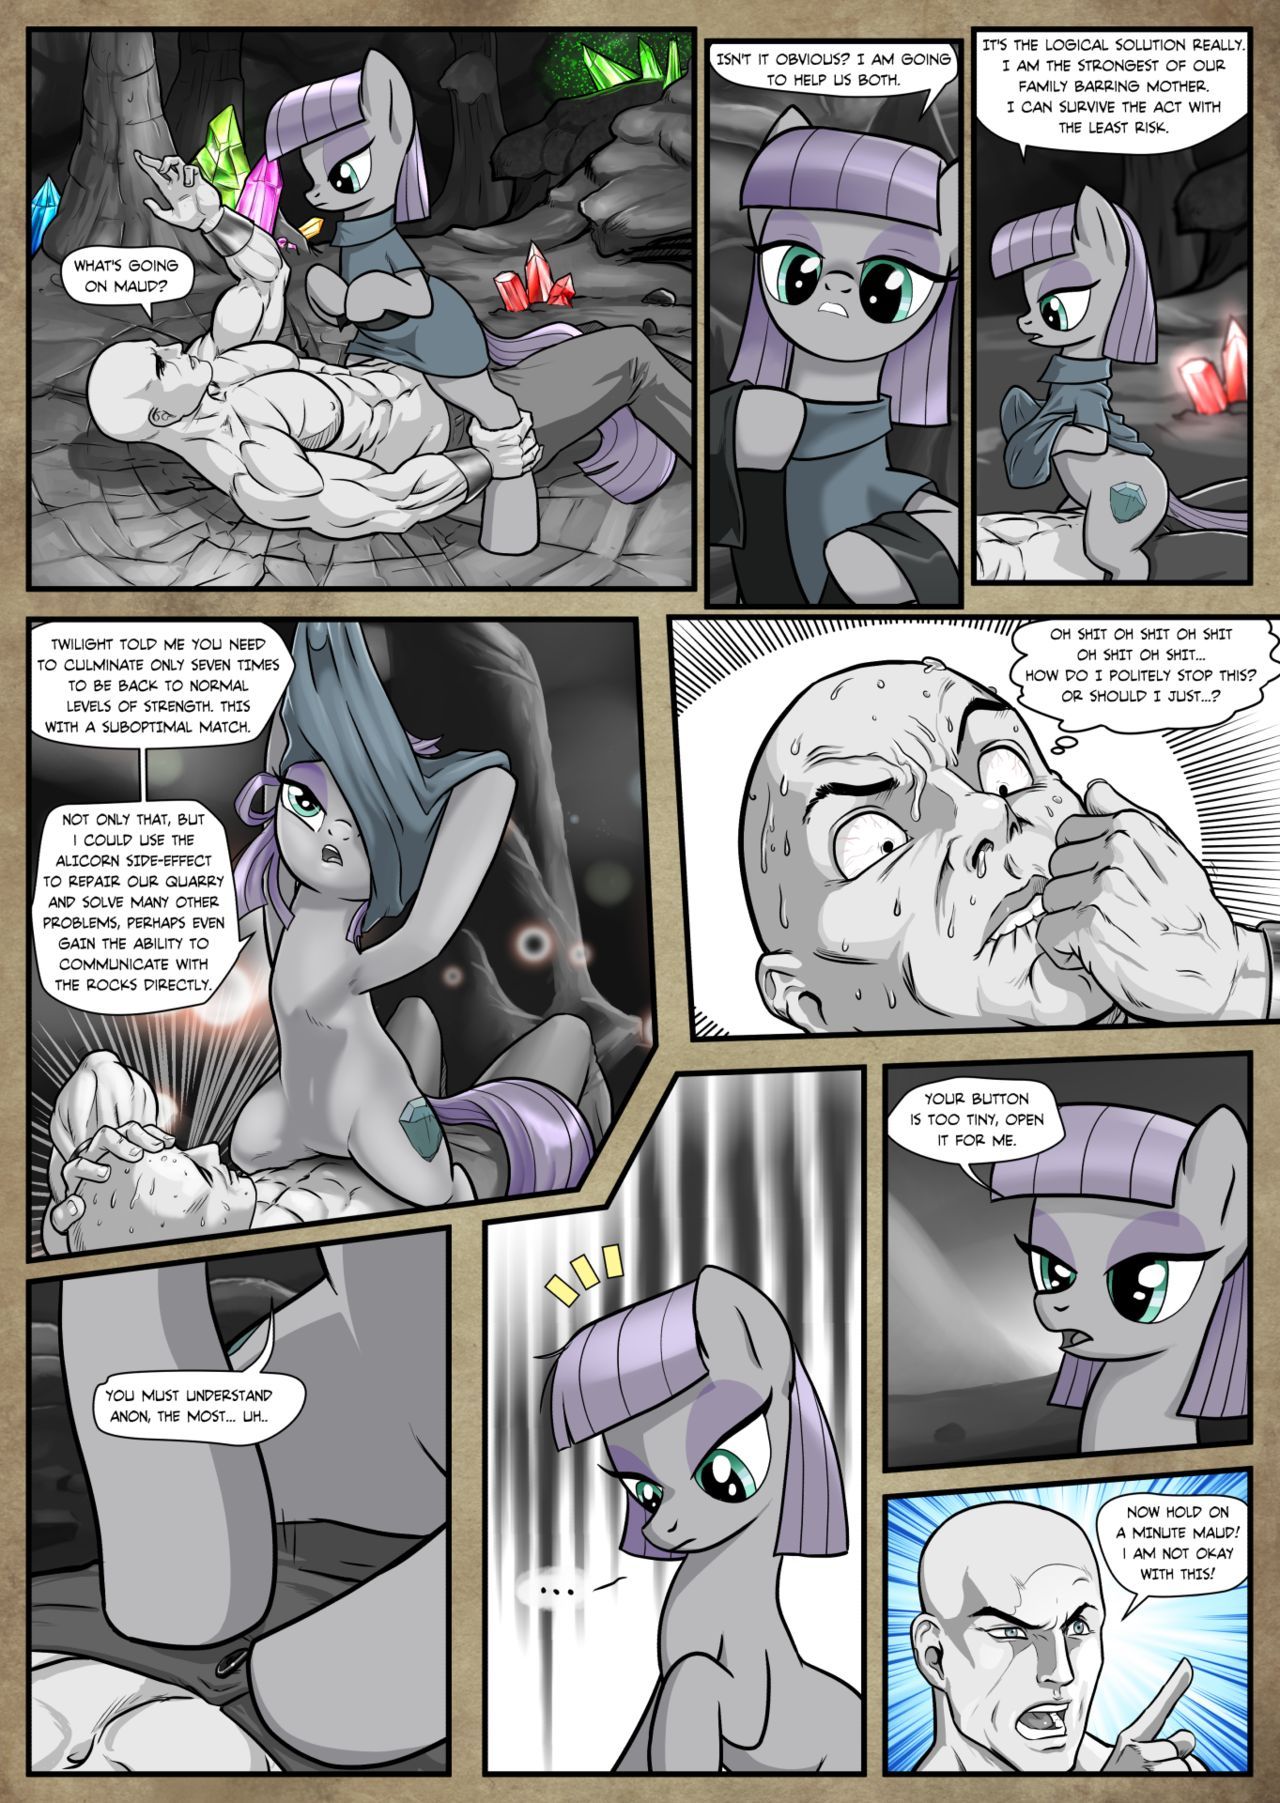 [Pencils] Anon's Pie Adventures (My Little Pony: Friendship is Magic) [In-Progress] 167